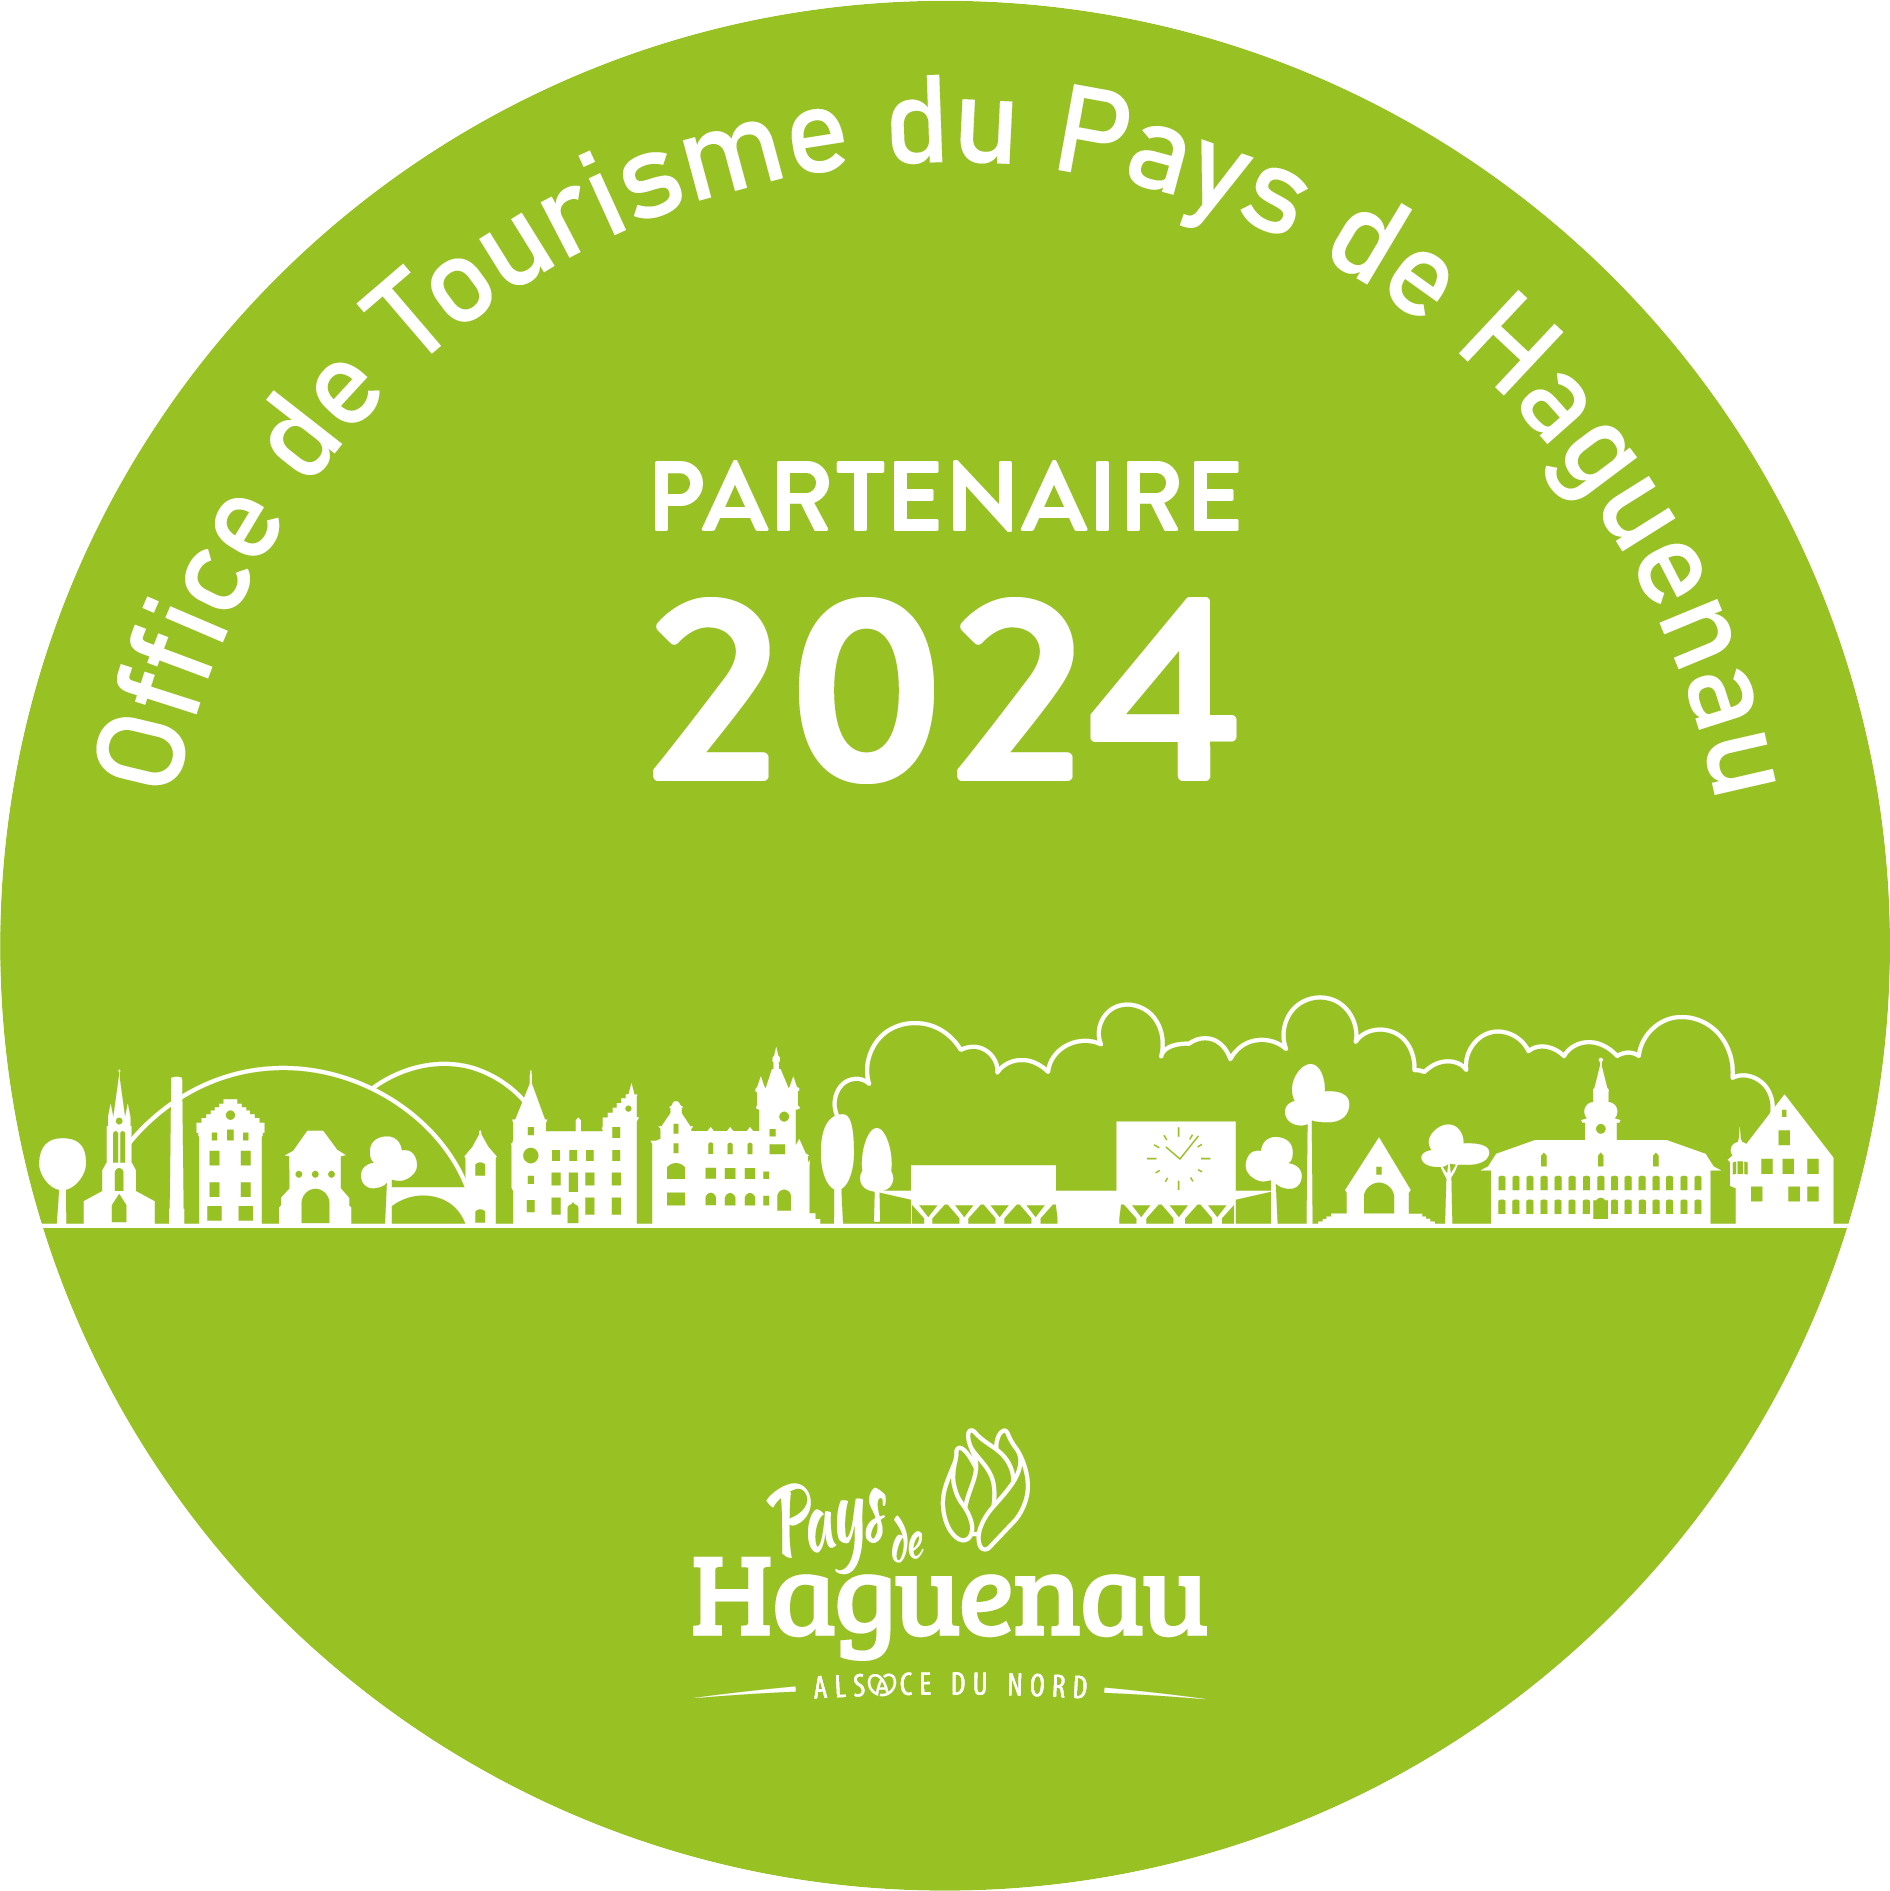 The 2024 partners of the Pays de Haguenau Tourist Office